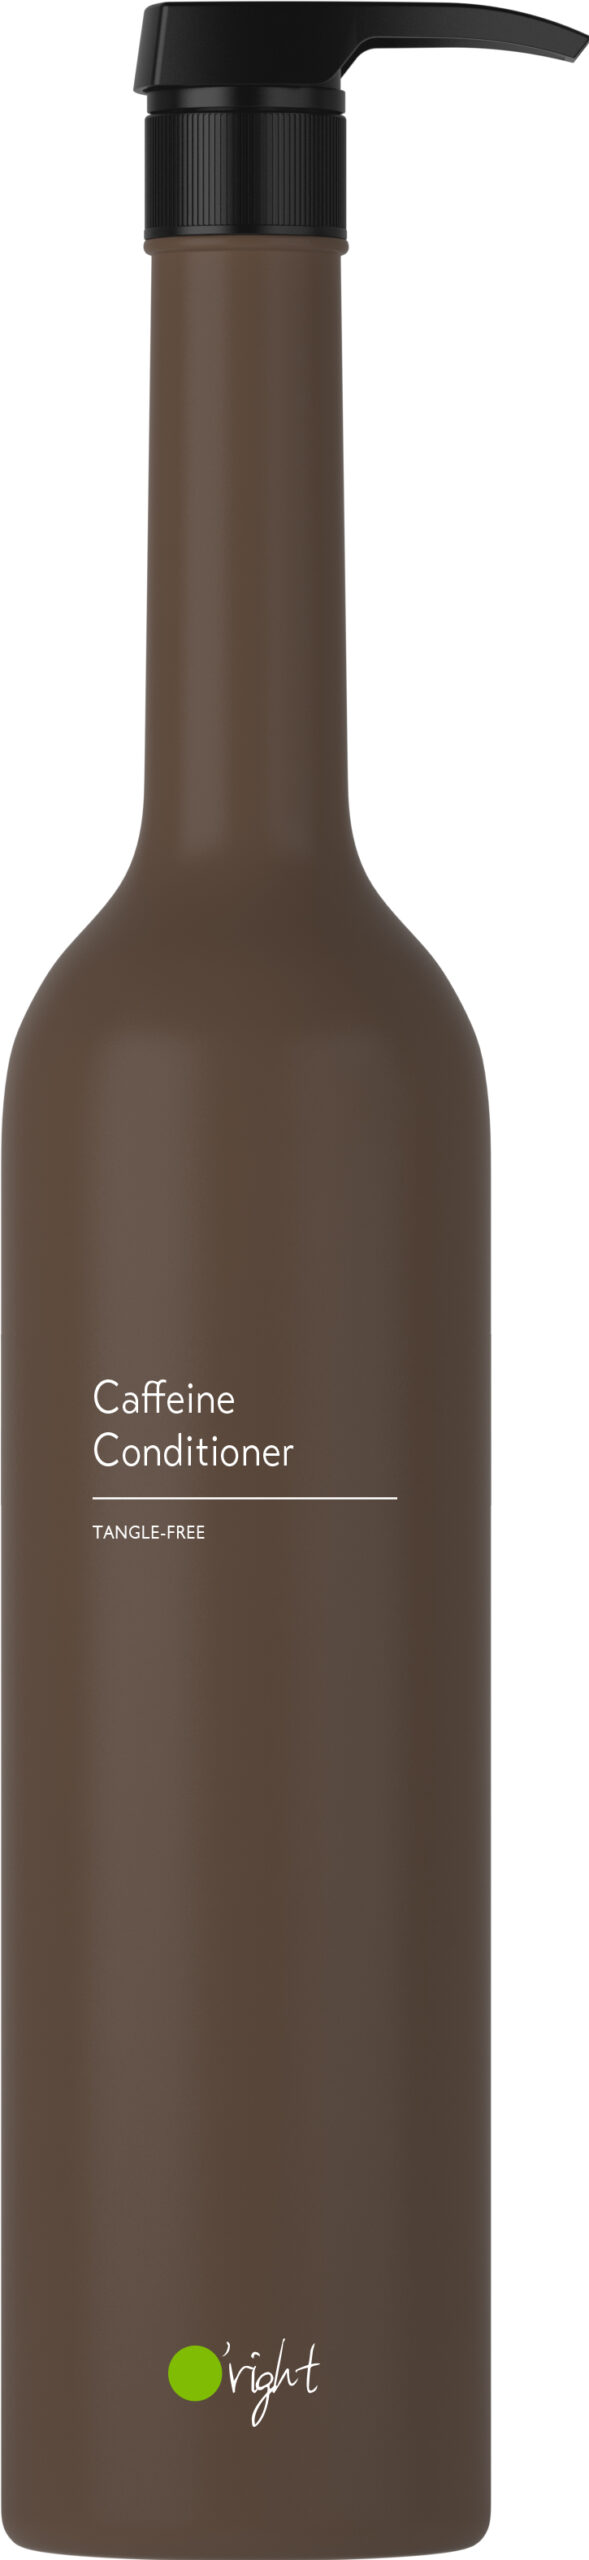 Caffeine Conditioner 1000ml 2020 scaled